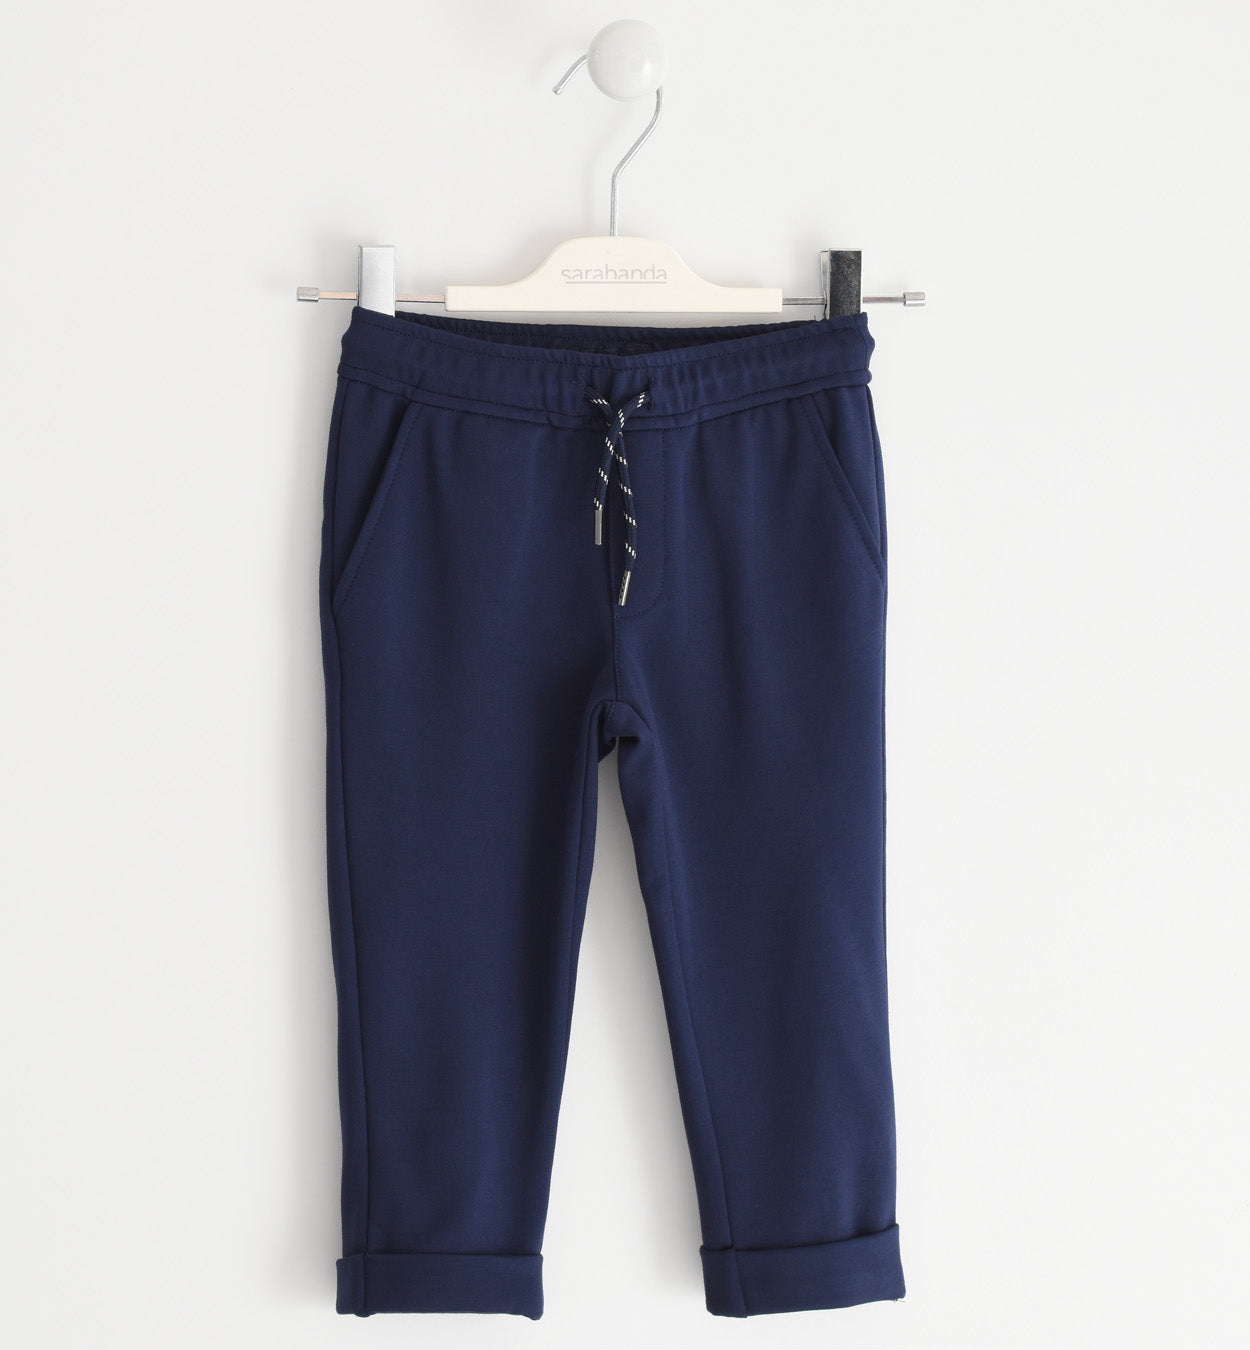 Pantalone , Pantalone in punto milano  per bimbo colore Navy Sarabanda 0j141 - BabyBimbo 0-16, abbigliamento bambini